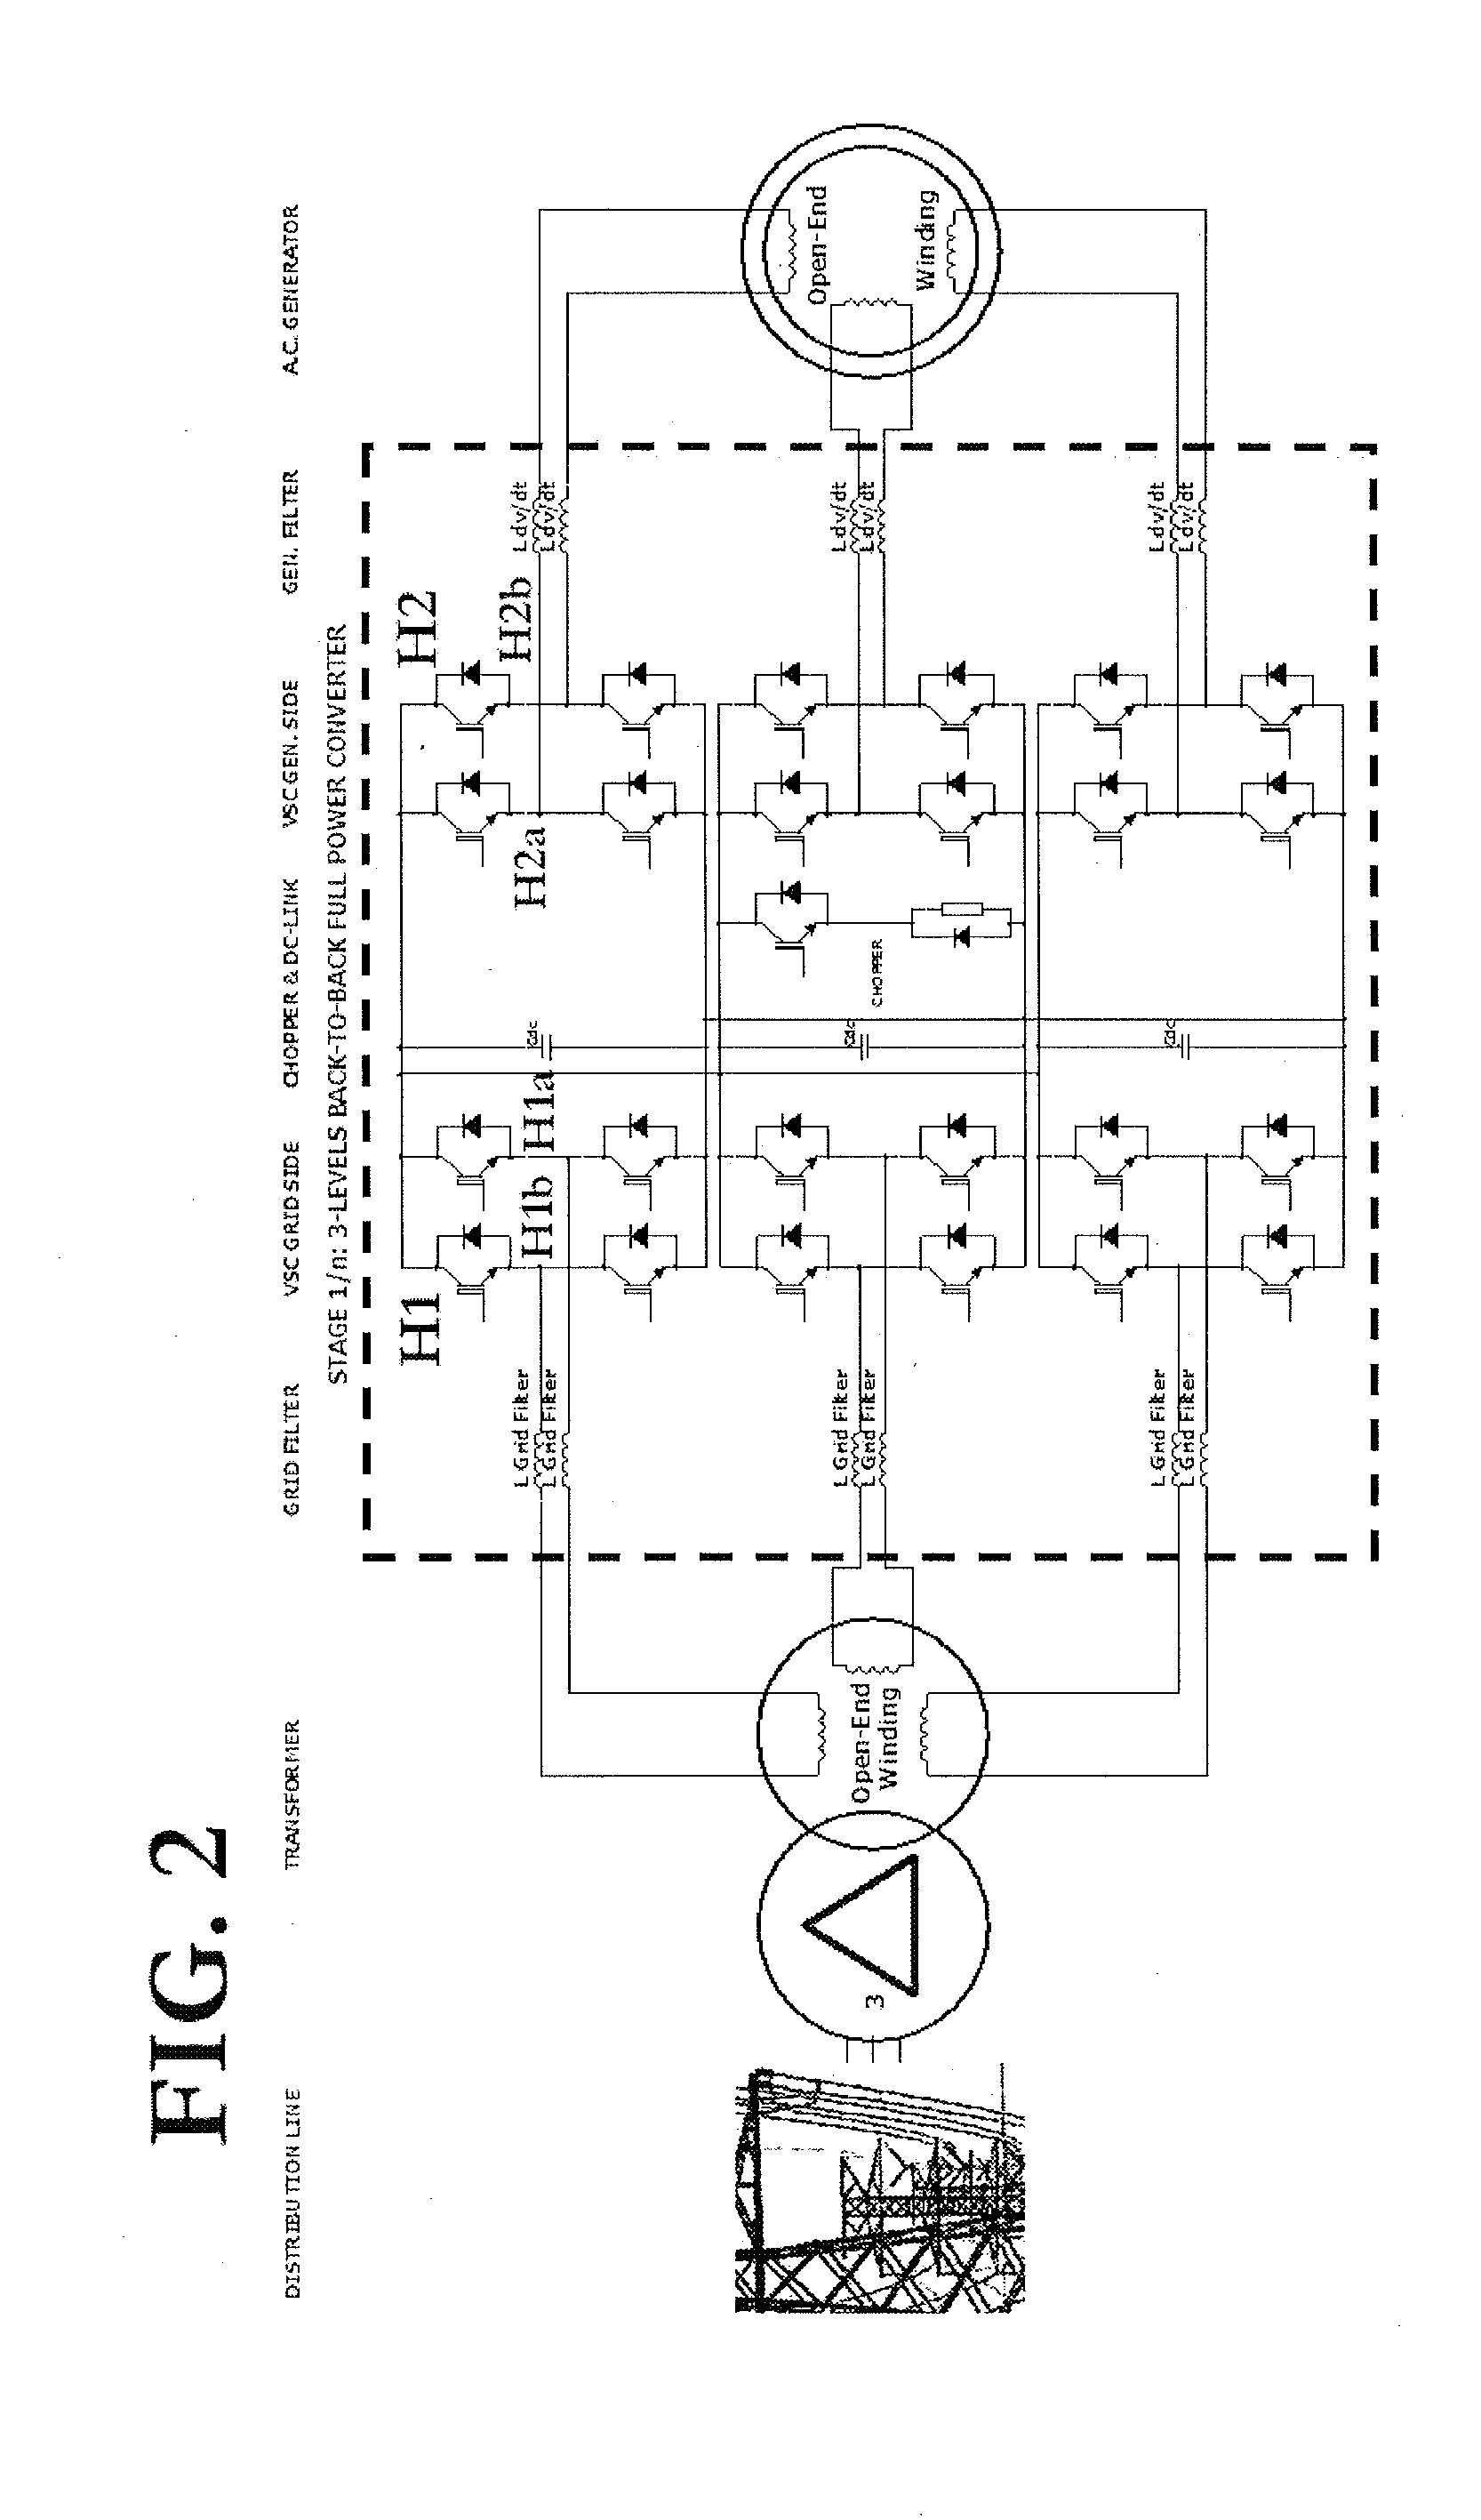 Multilevel power converter or inverter arrangement using h bridges